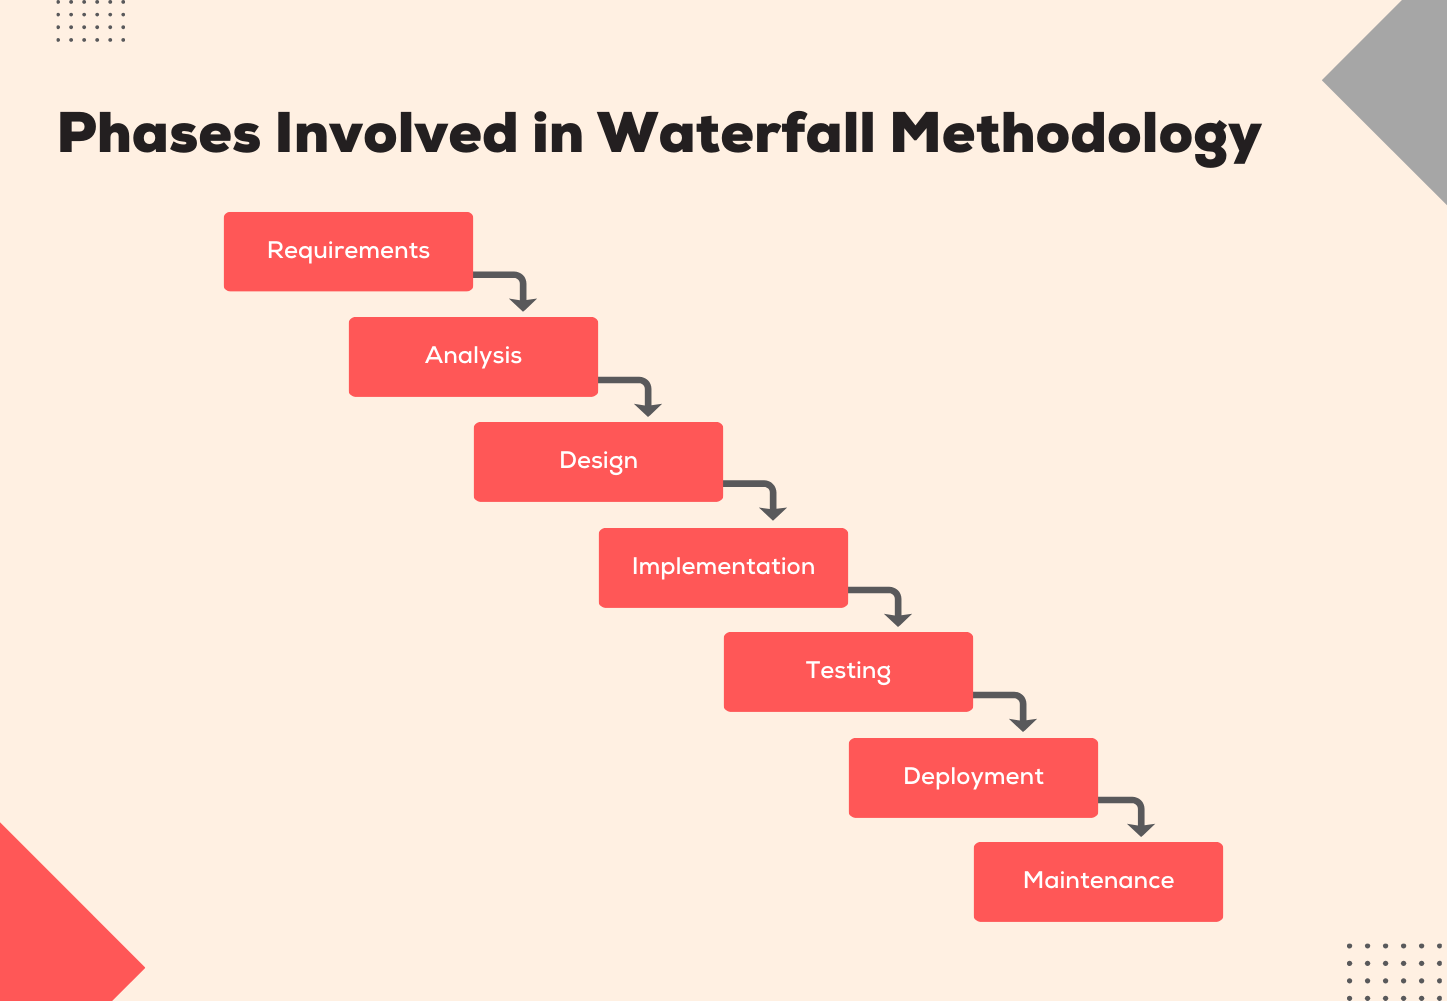 Phases of Waterfall Methodology